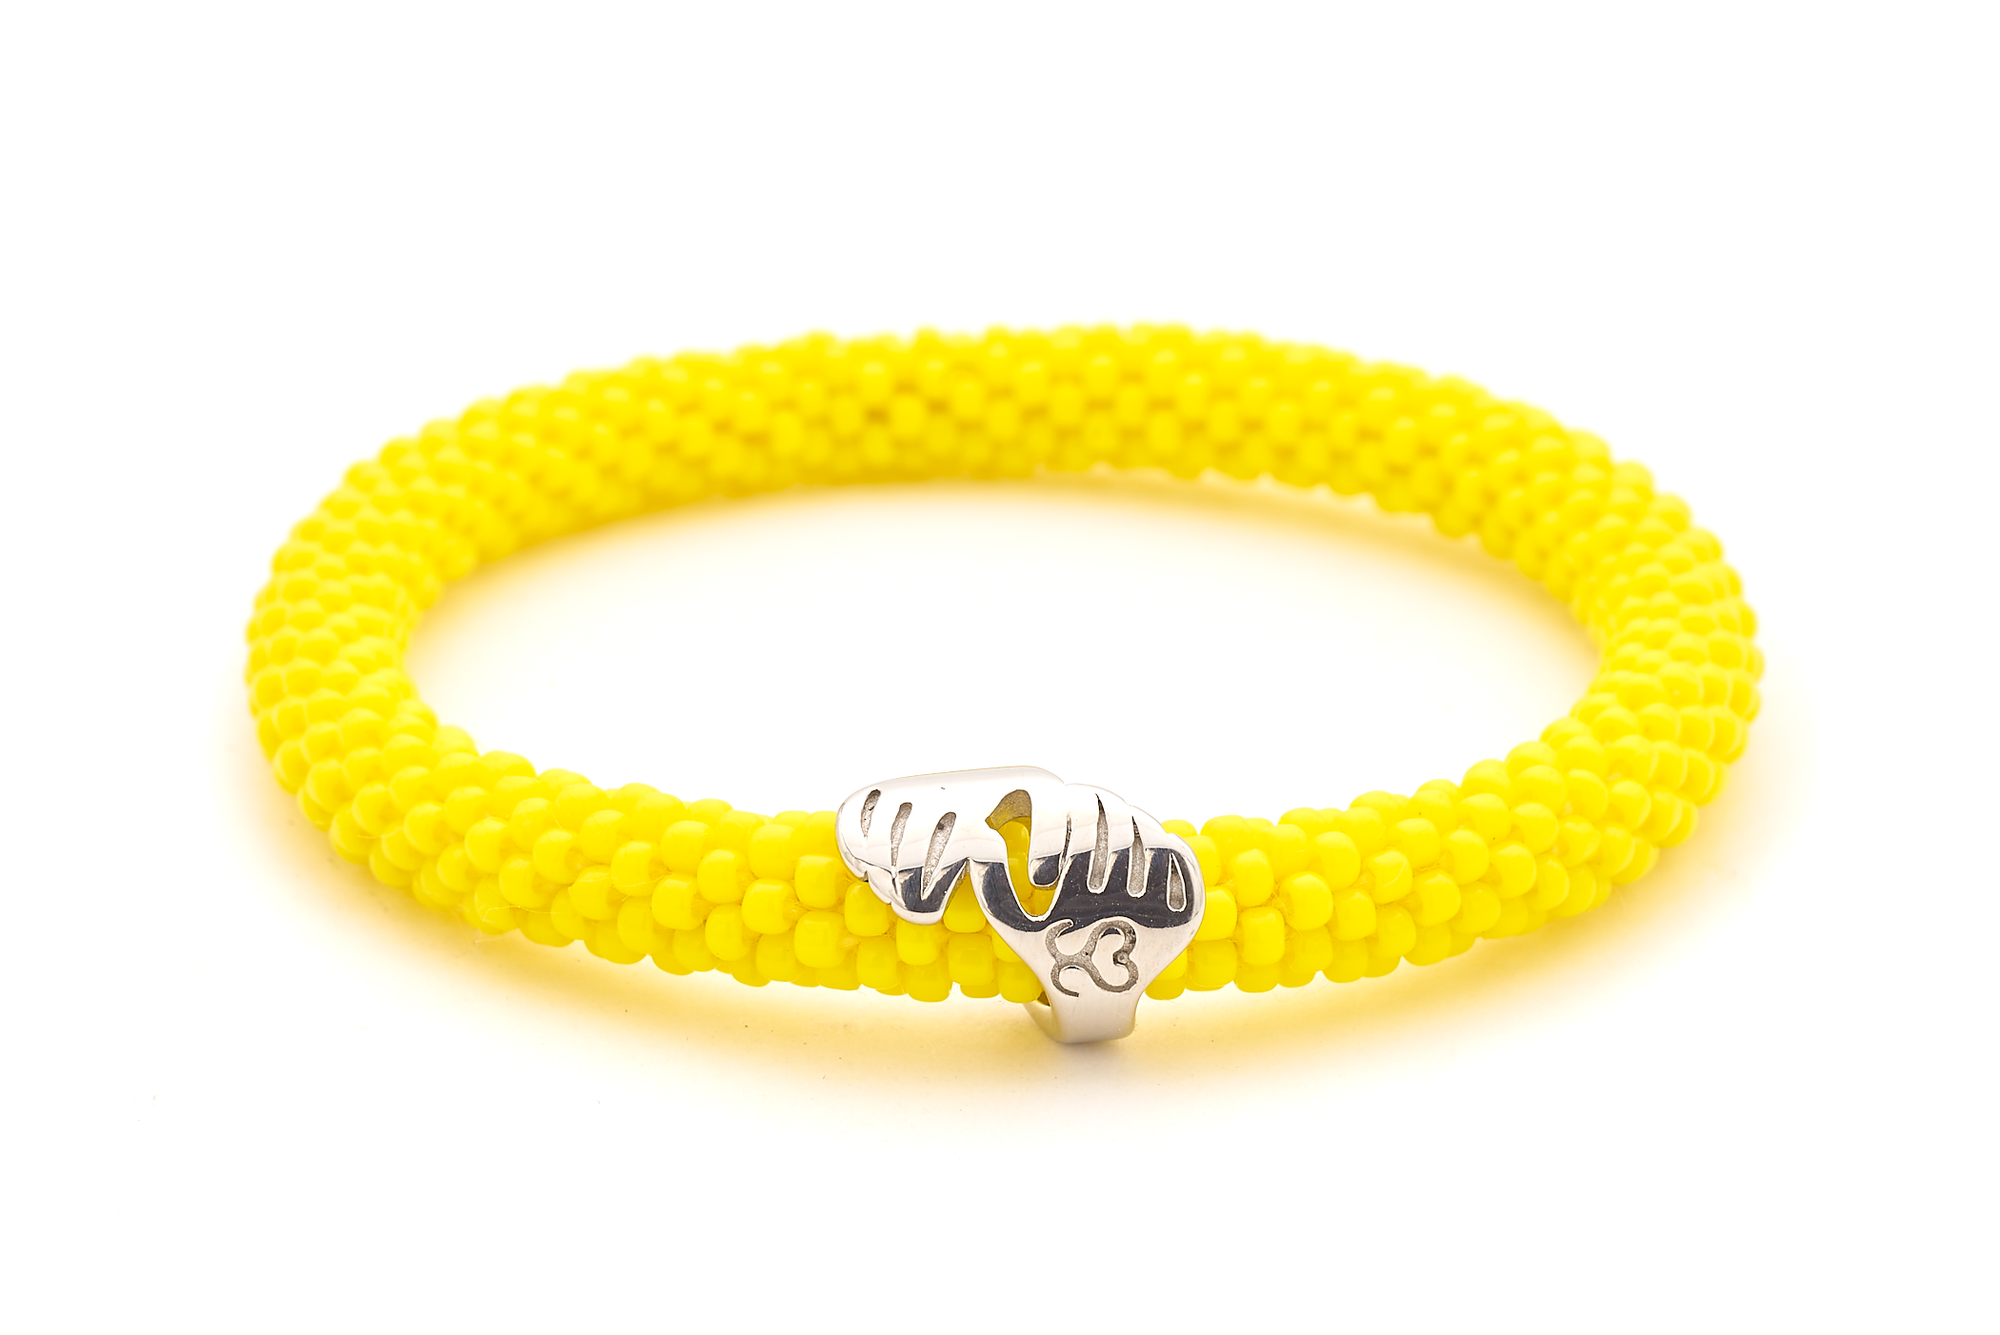 Sashka Co. Extended 8" Bracelet Yellow / w Silver Charm Friendship Charm Bracelet - Extended 8"